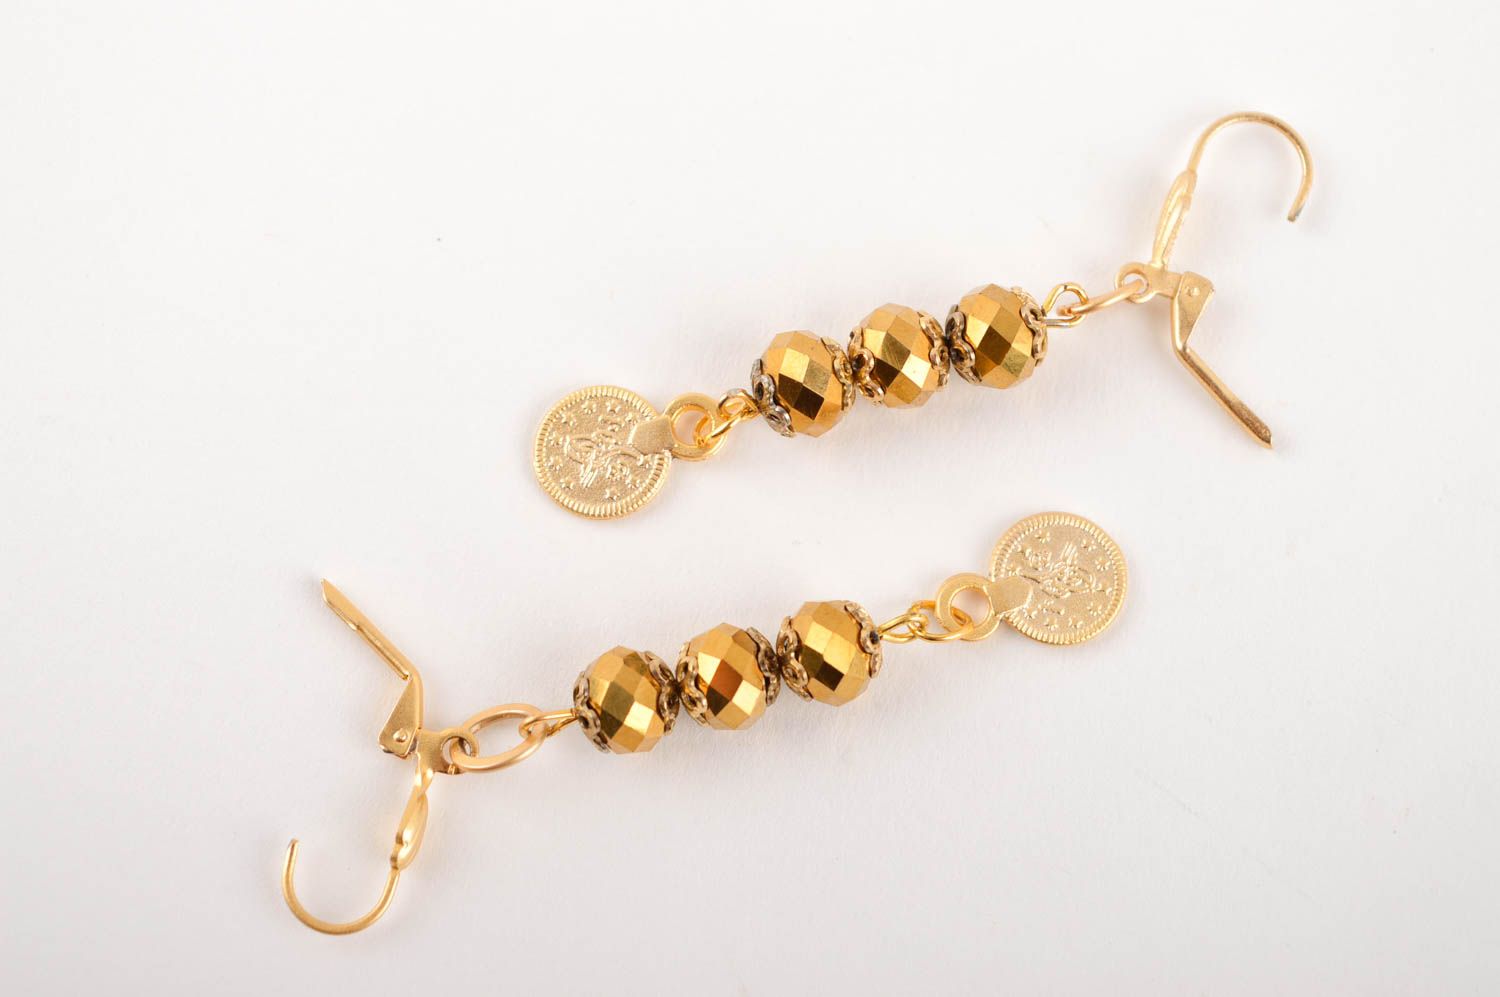 Handmade stylish earrings with beads long earrings with charms fashion jewelry photo 5